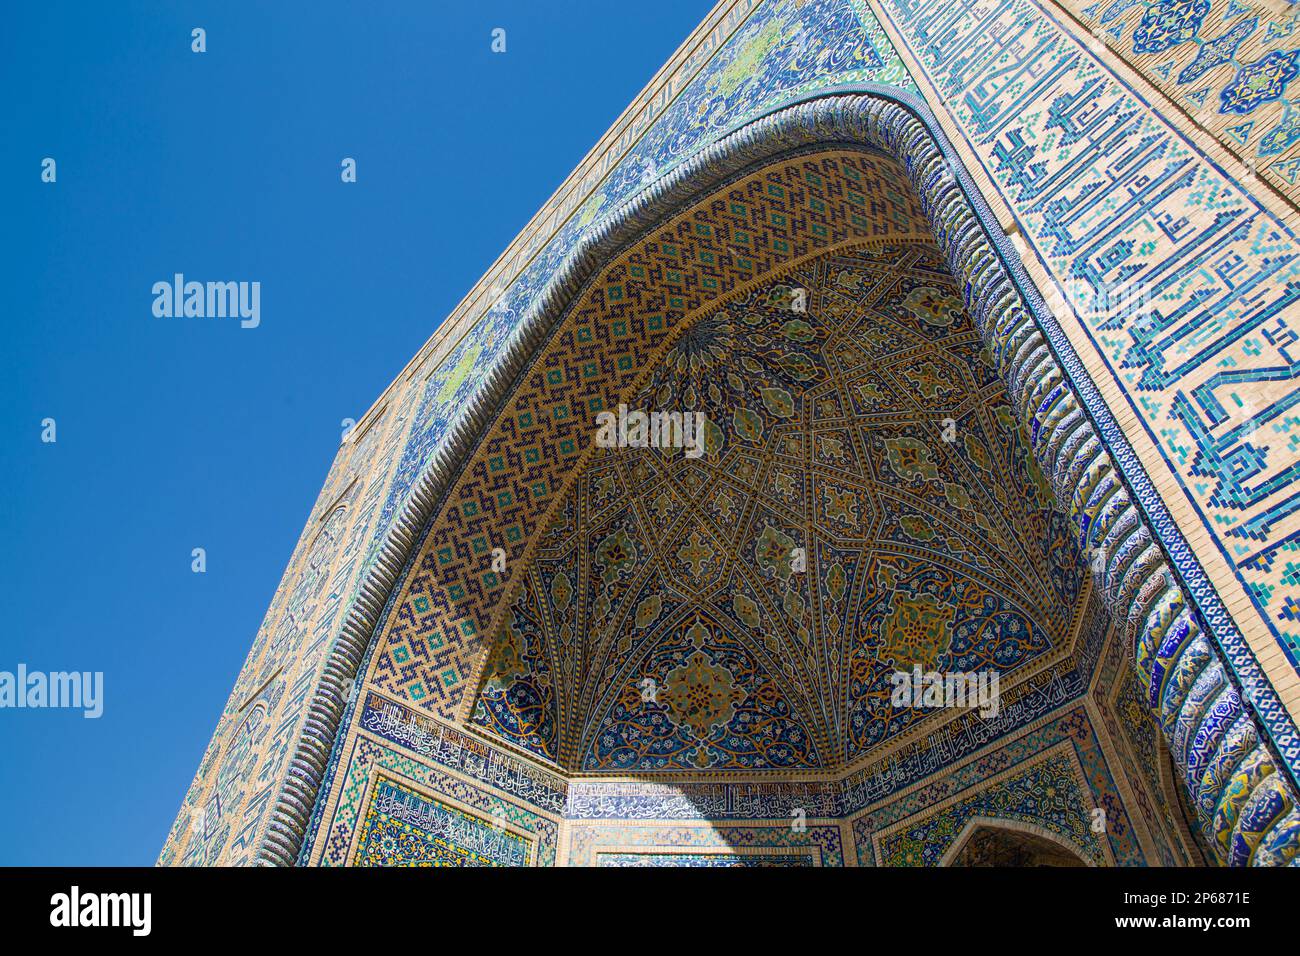 Fliesenarbeiten, Sherdor Madrassah, fertiggestellt 1636, Registanplatz, UNESCO-Weltkulturerbe, Samarkand, Usbekistan, Zentralasien, Asien Stockfoto